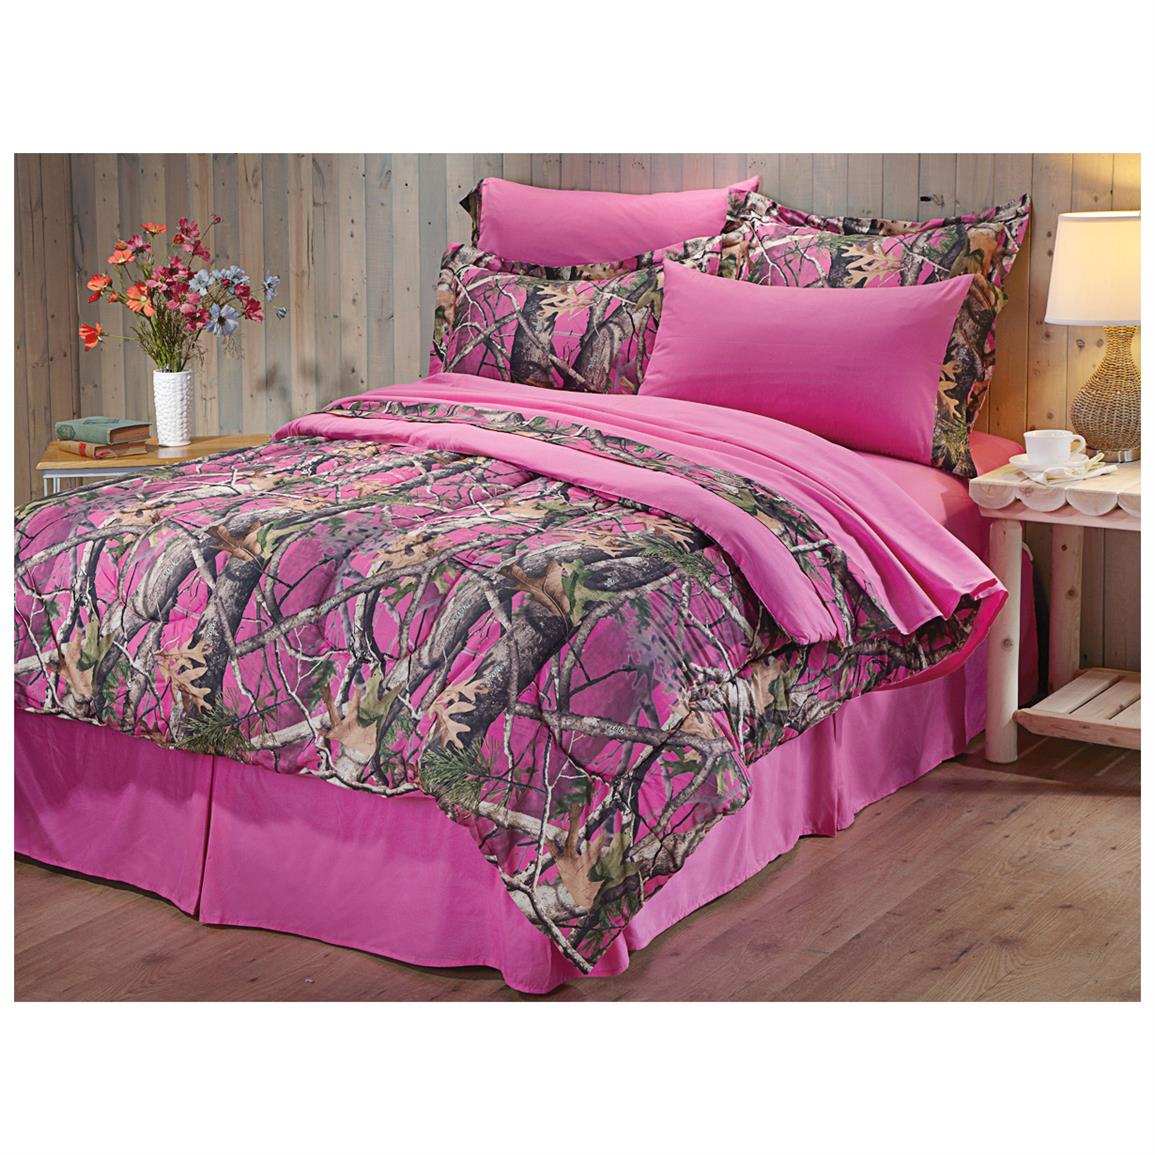 CASTLECREEK Next Vista Pink Camo Complete Bed Set - 609062, Comforters